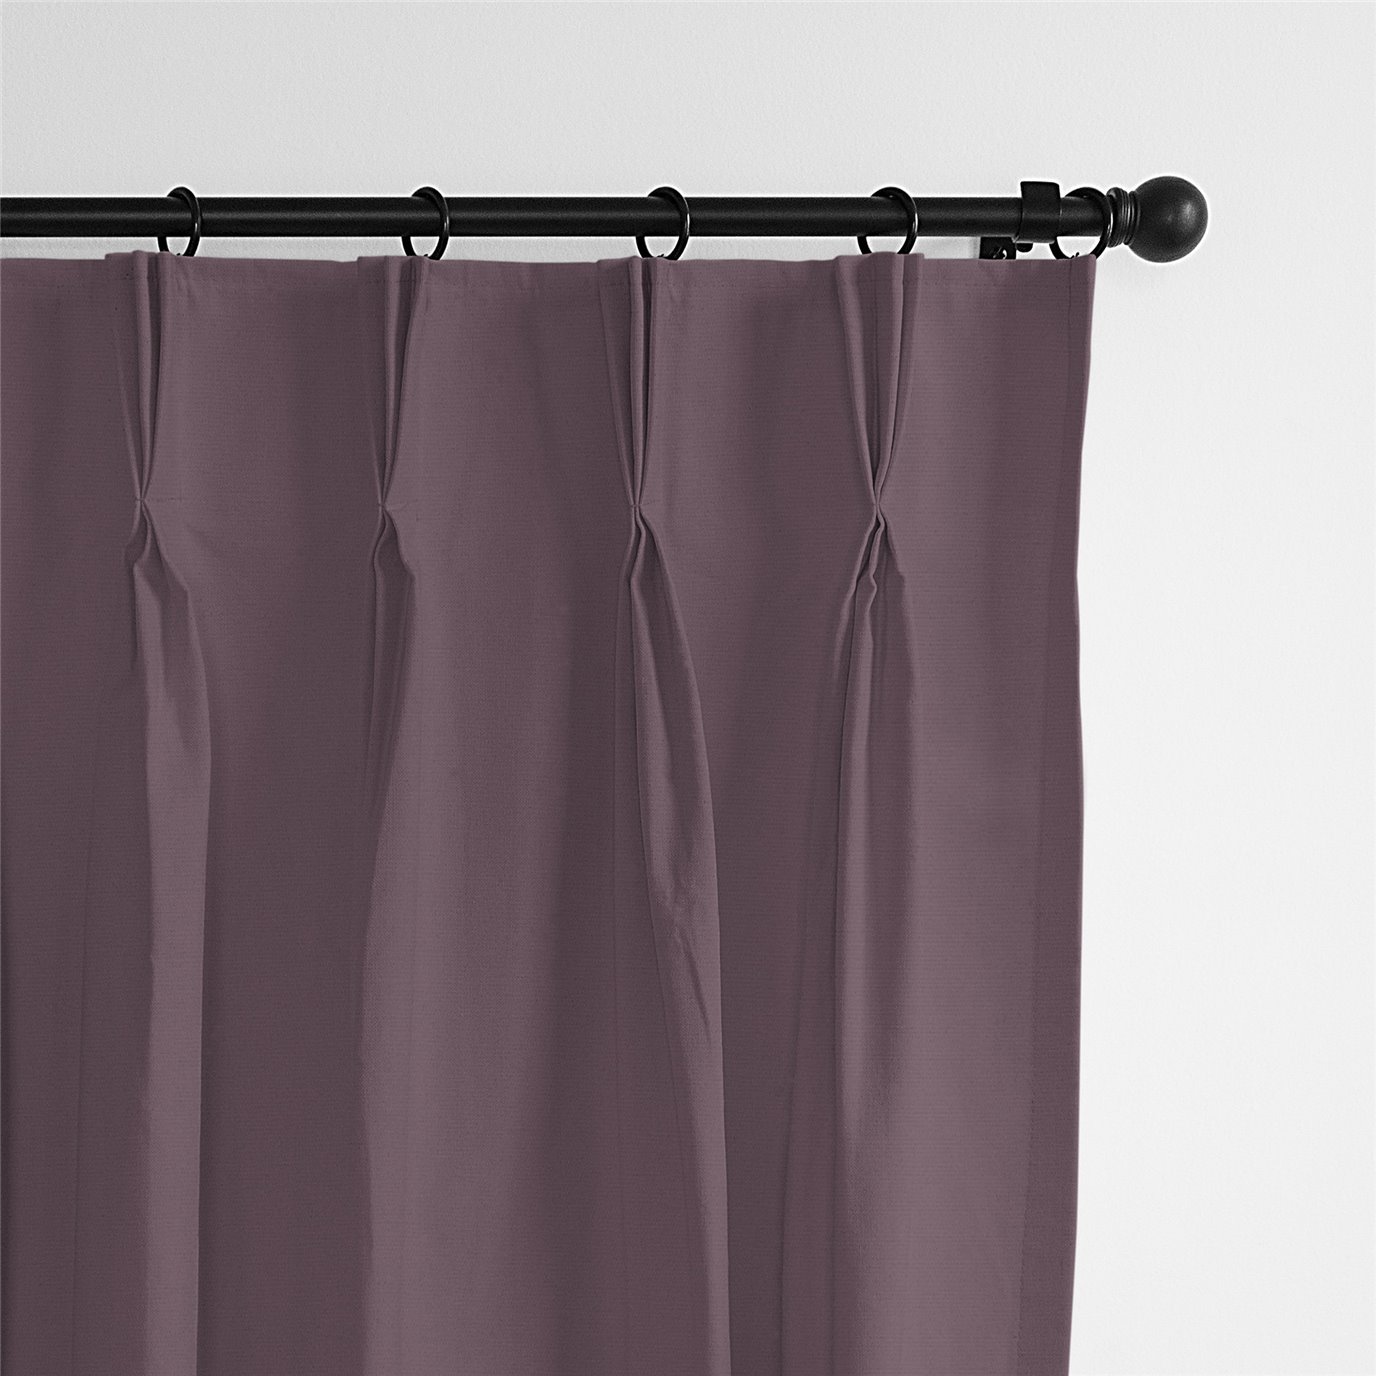 Braxton Purple Grape Pinch Pleat Drapery Panel - Pair - Size 40"x84"